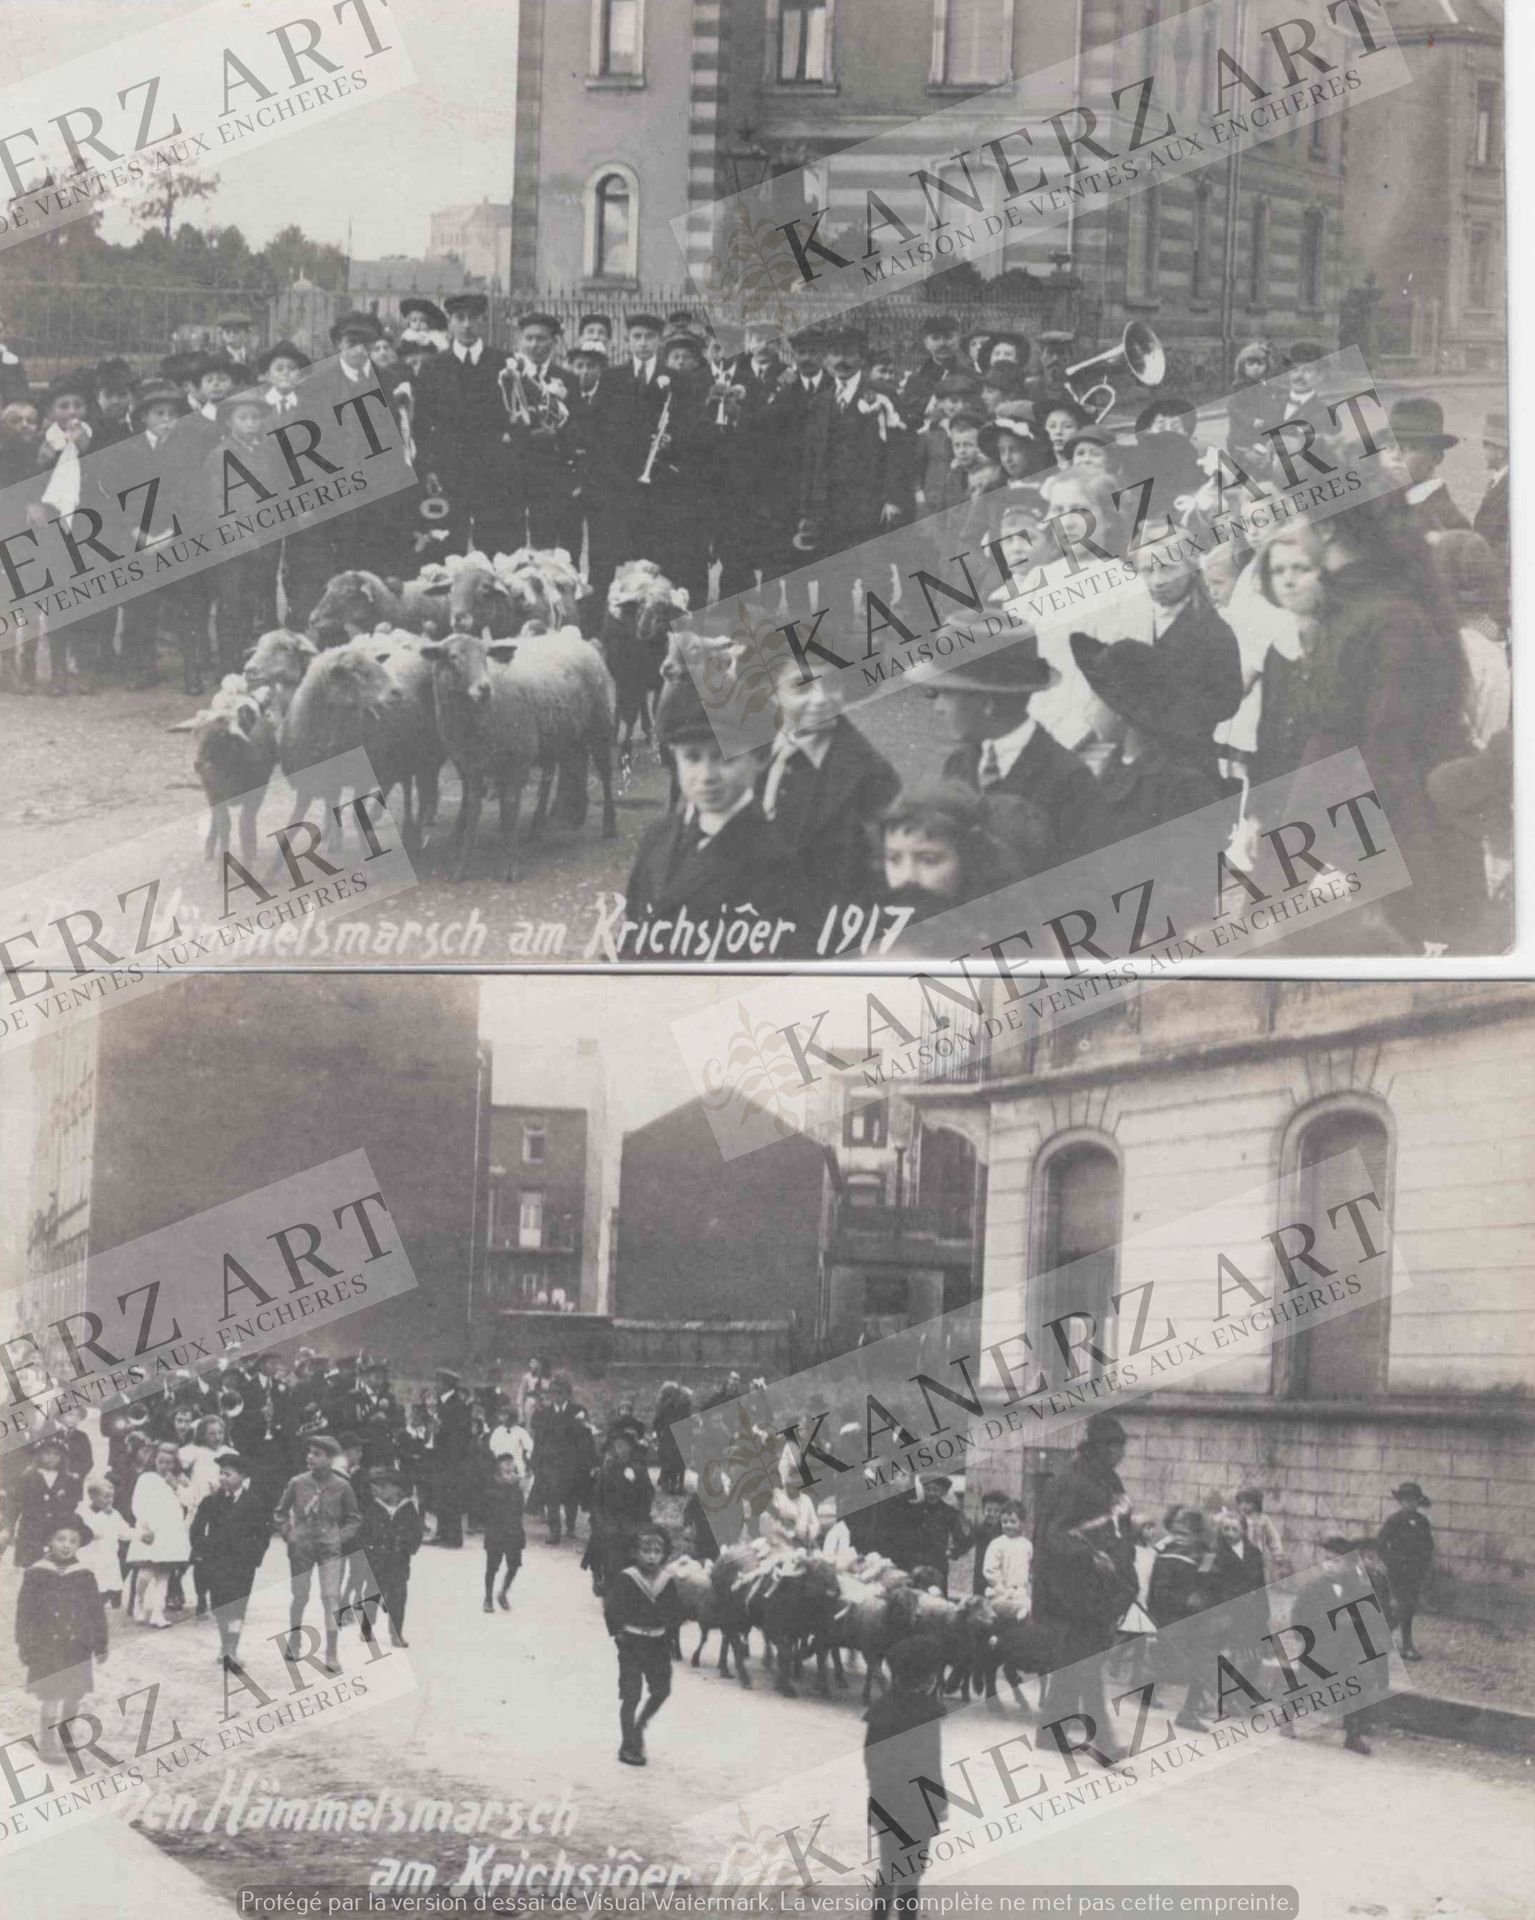 Null (UFFICIALE) 2 carte fotografiche Hämmelsmarsch 1917, Wirol + 1 cartolina Hä&hellip;